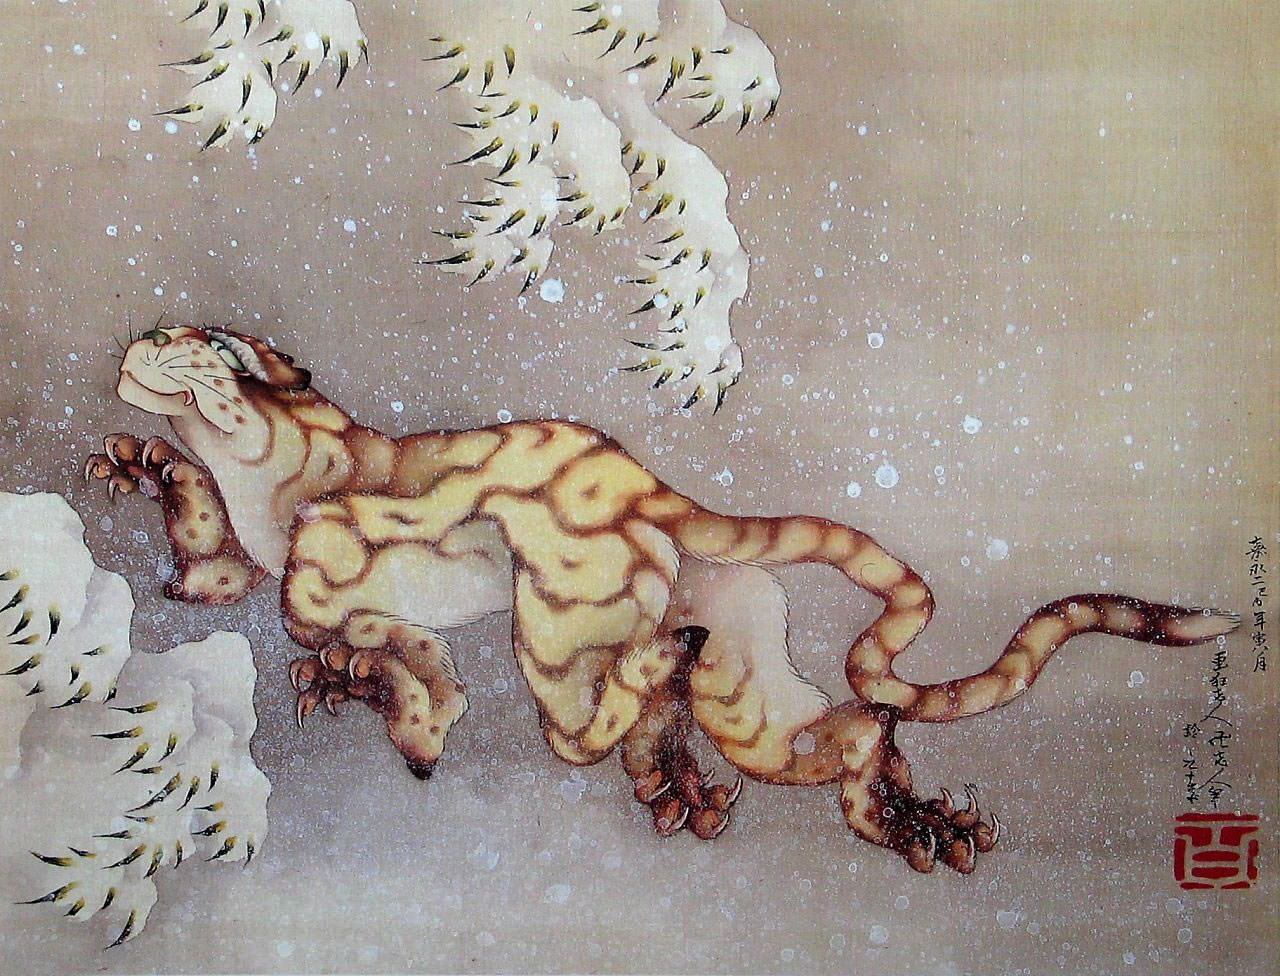 Kardaki Kaplan by Katsushika Hokusai - 1849 özel koleksiyon